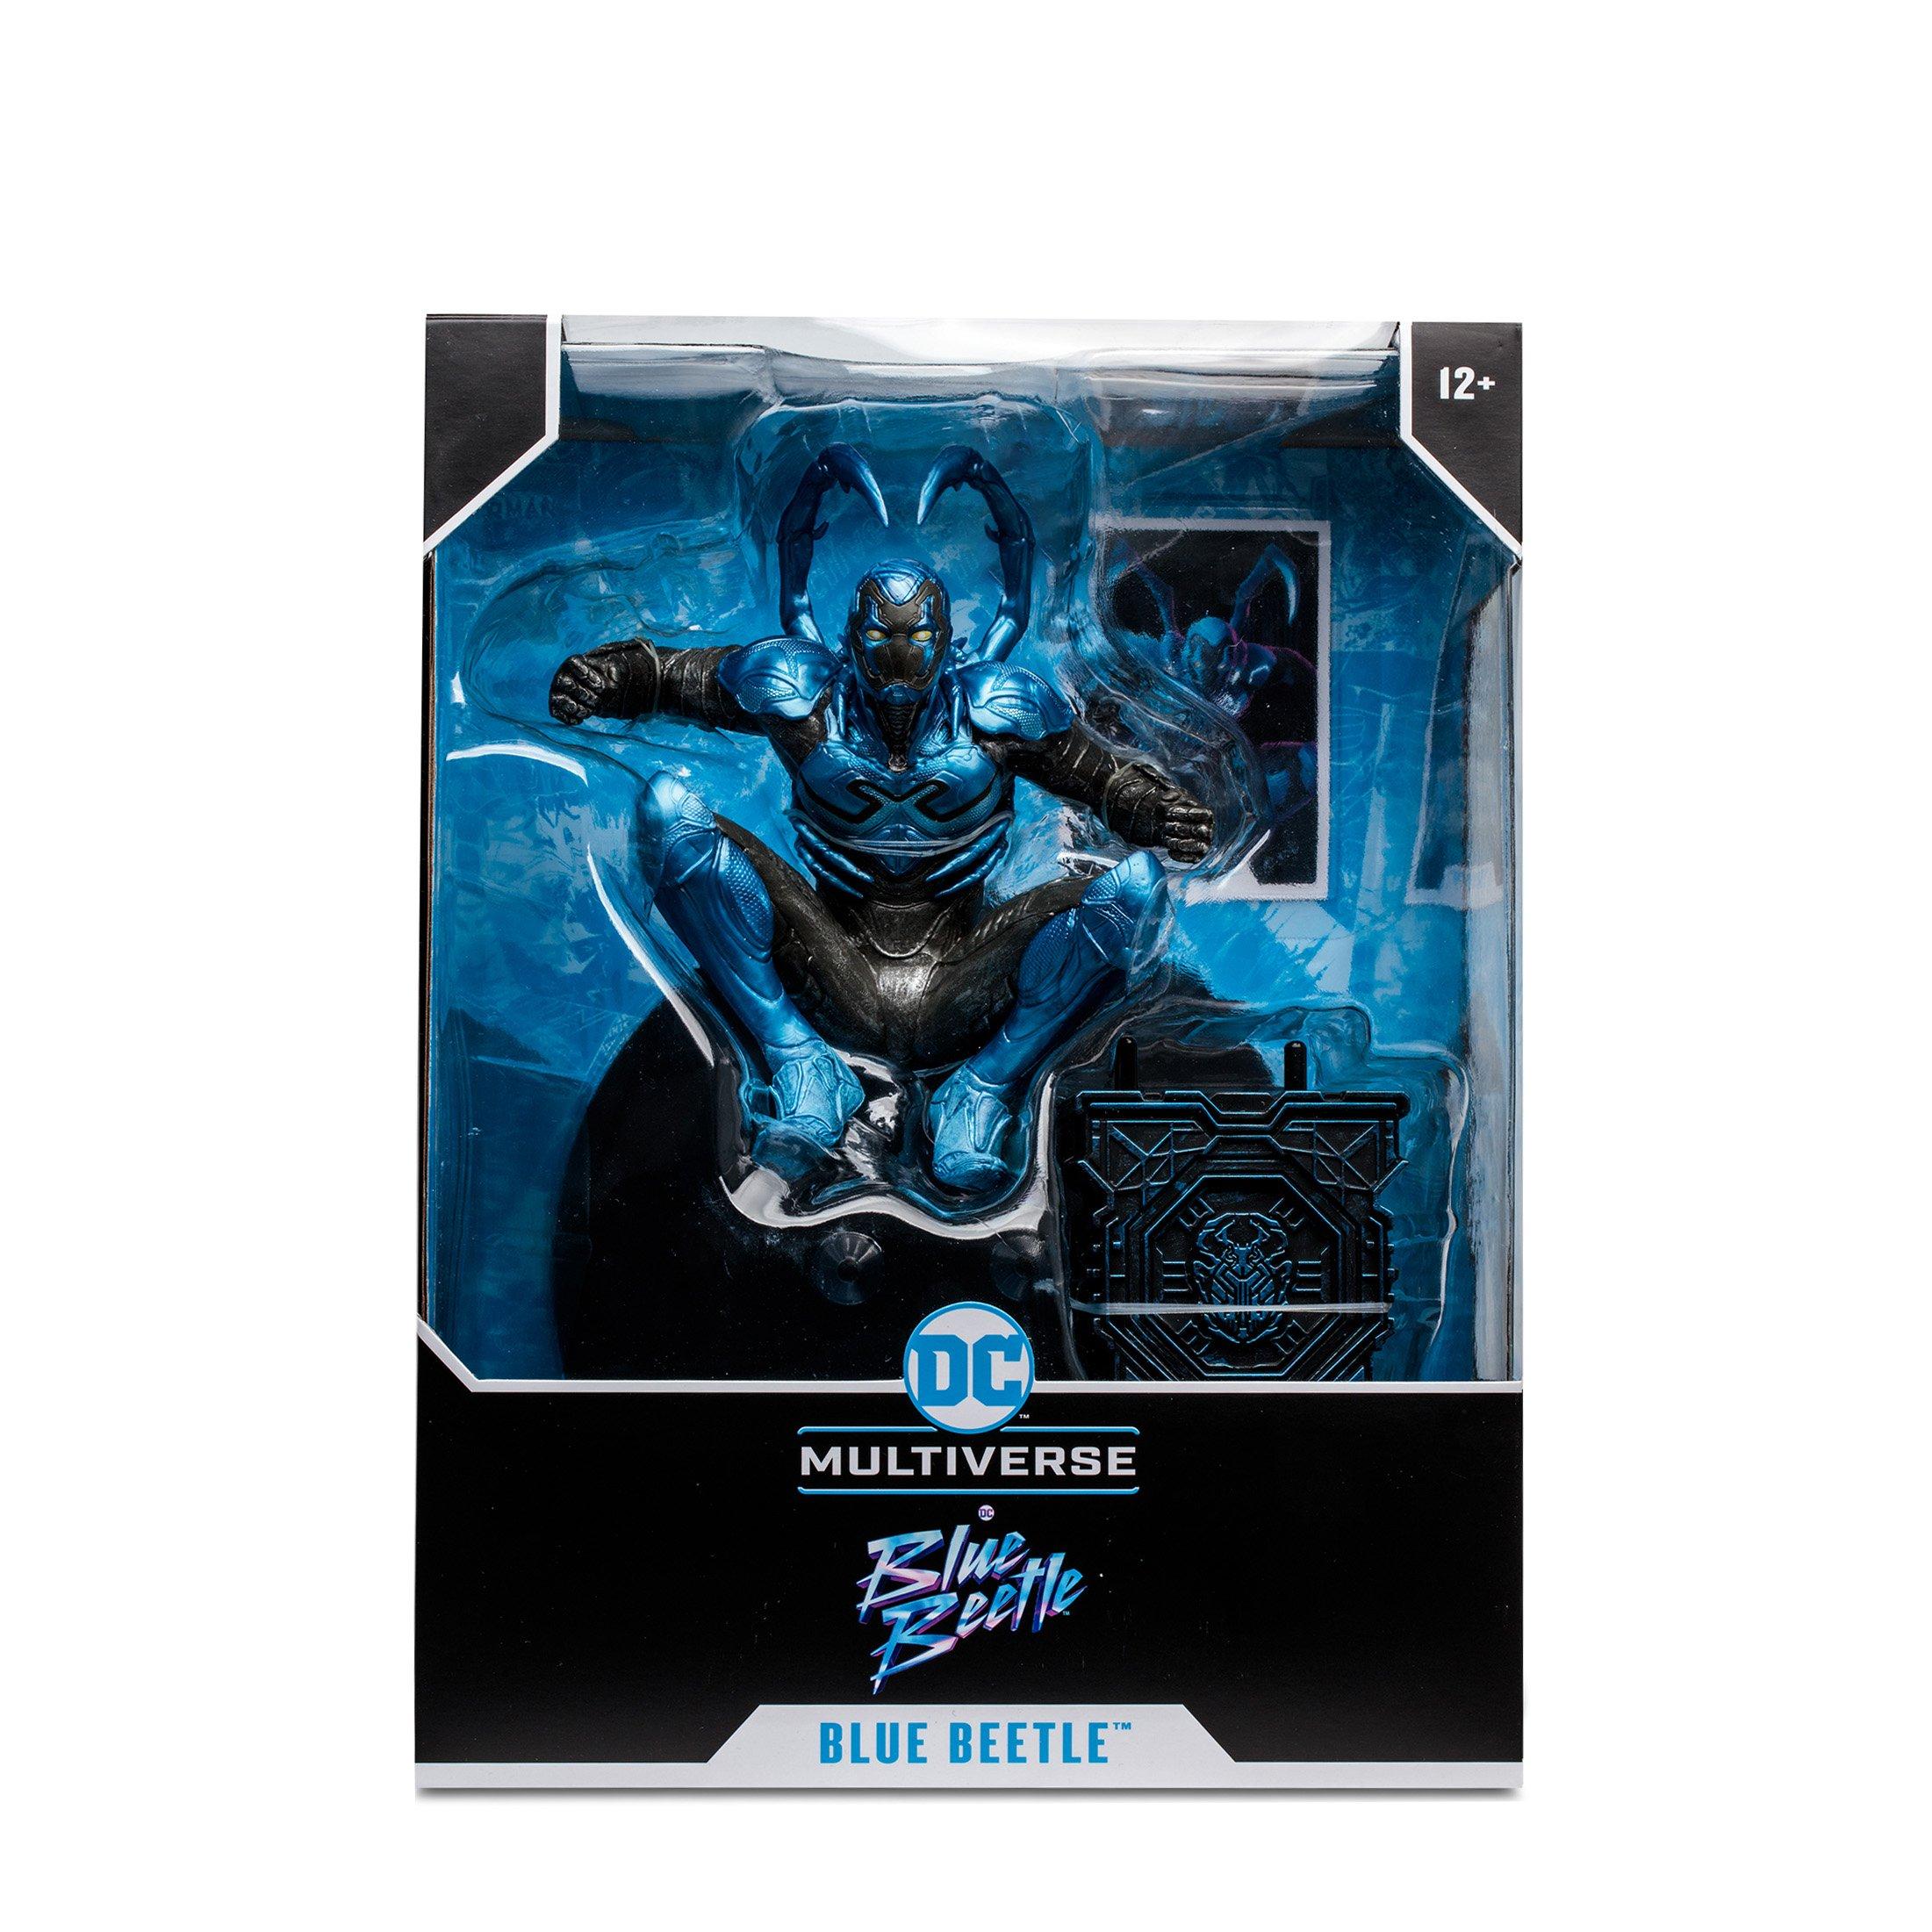 McFarlane Toys DC Multiverse Blue Beetle - Blue Beetle 12-In Action Figure